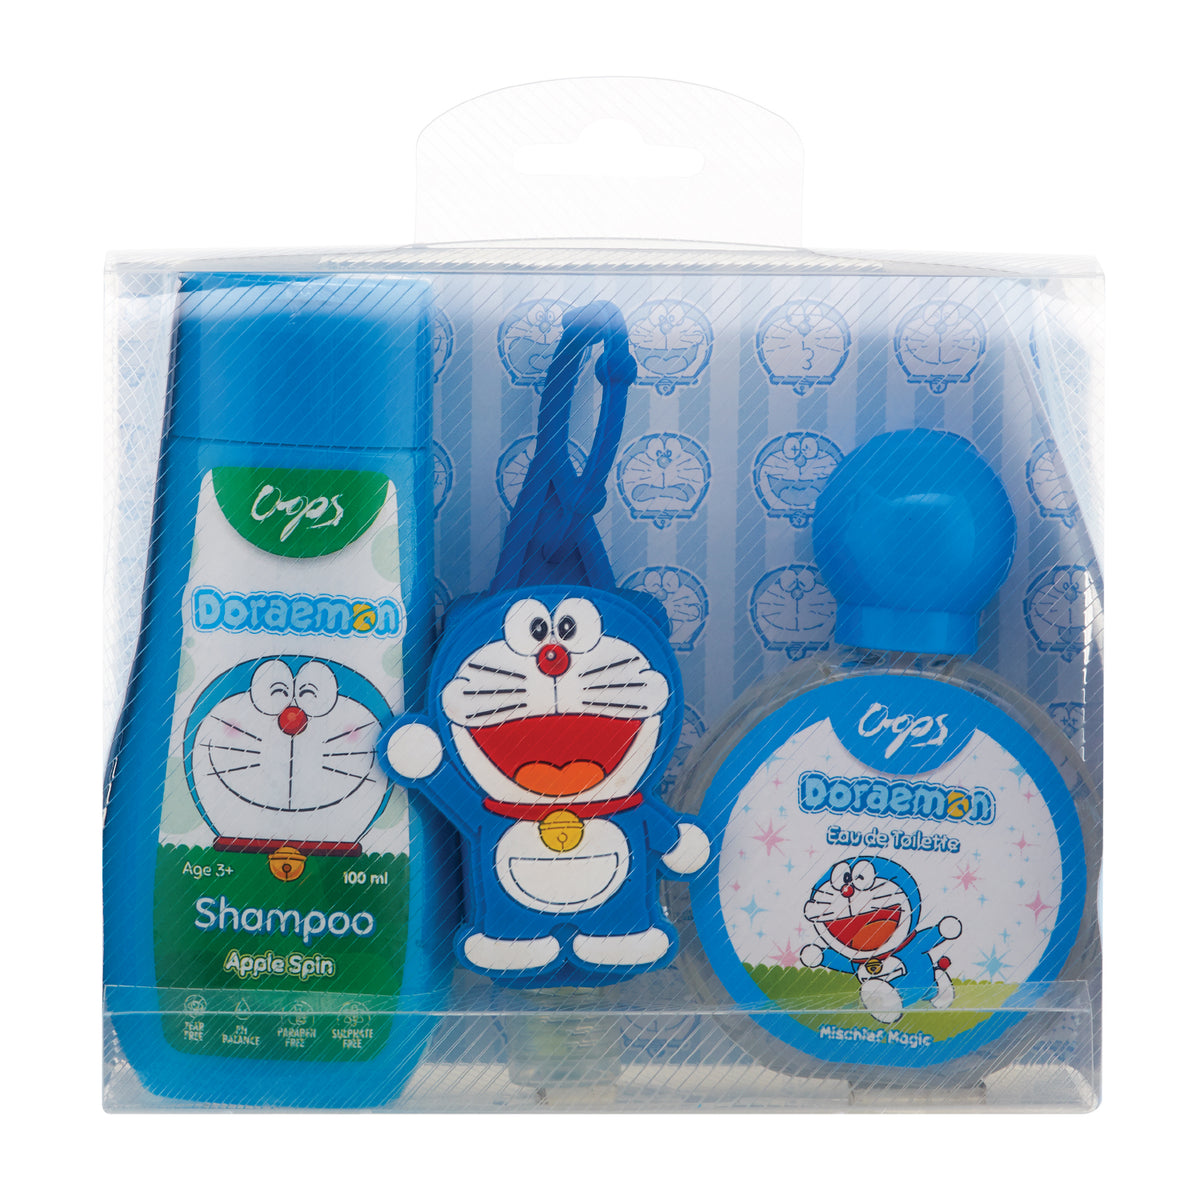 Doraemon Magic Gift Box - Shampoo Apple Spin, 100ml + Doraemon Bagtag, 30ml +Mischief Magical EDT, 50ml Gardenia Cosmotrade LLP